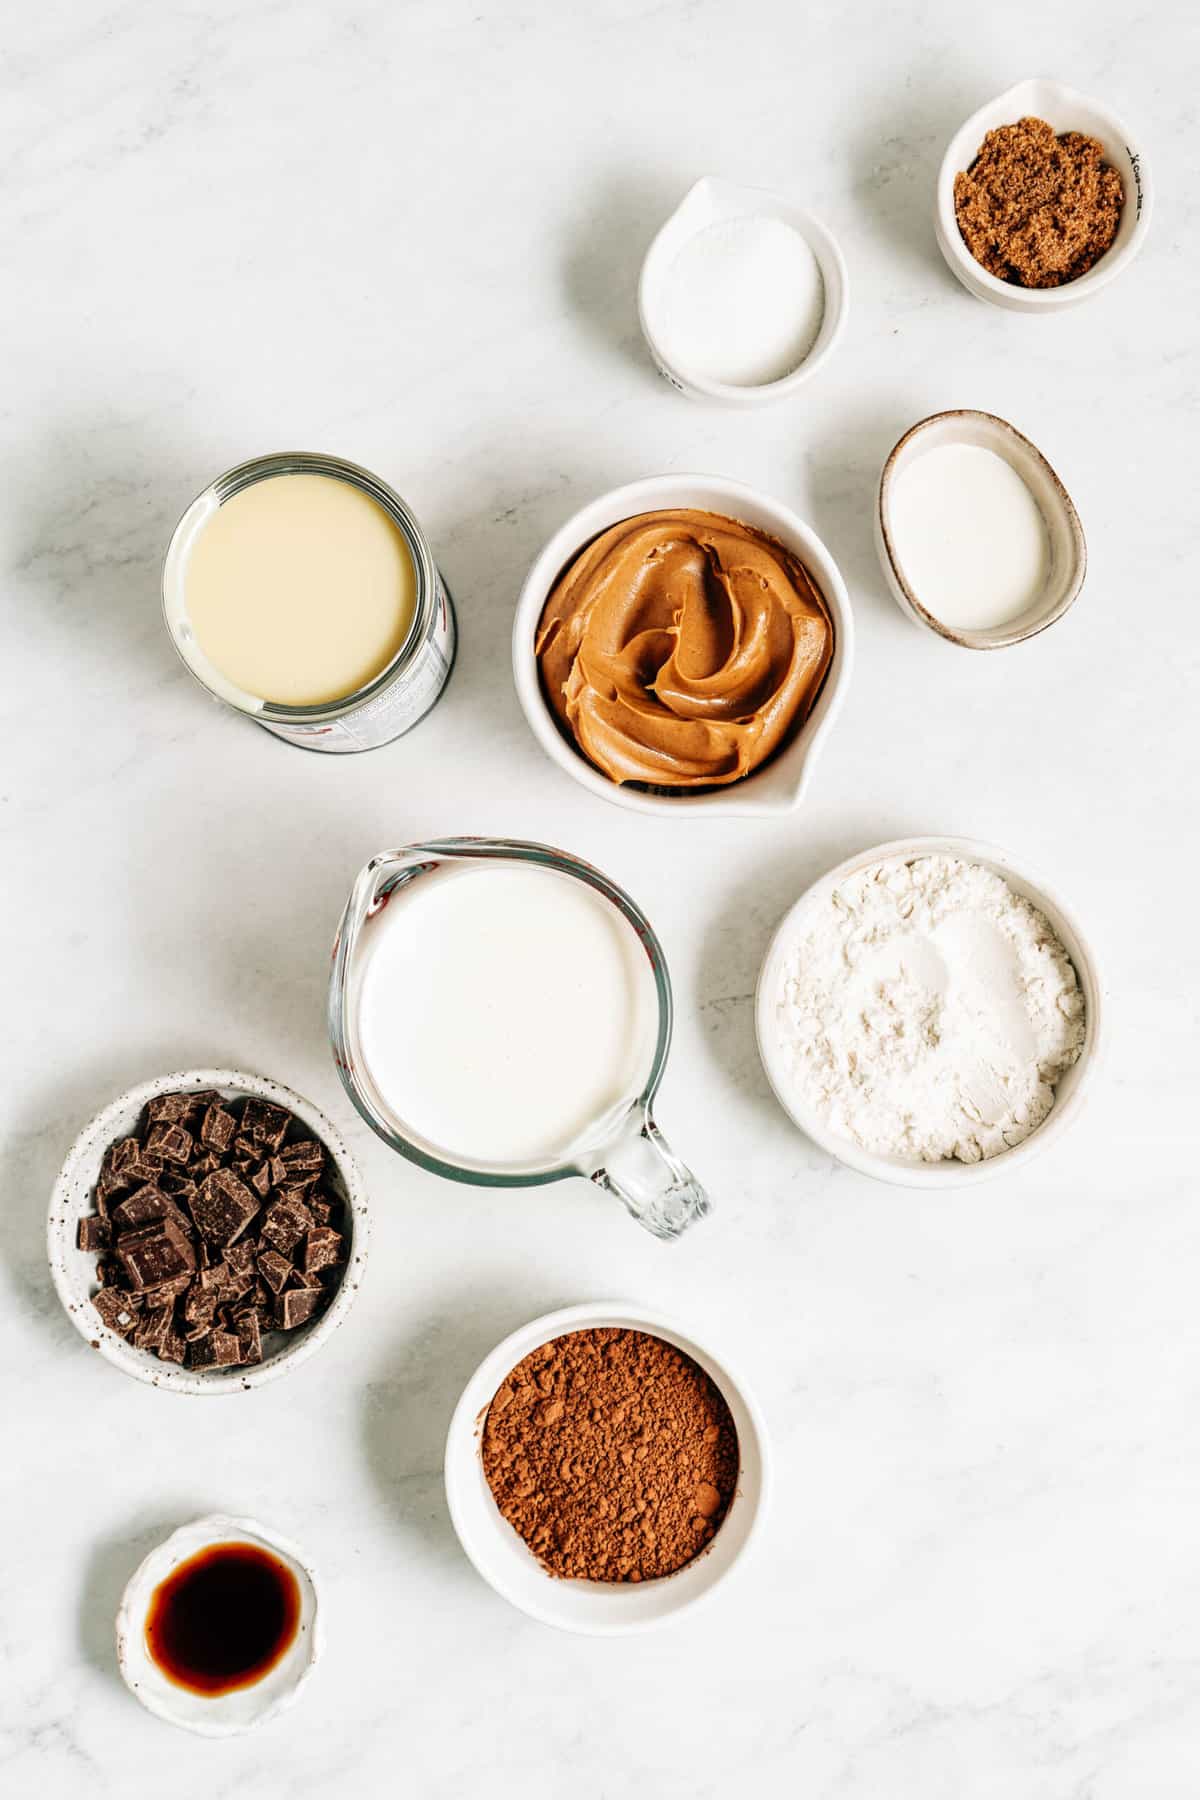 Chocolate peanut butter ice cream ingredients.